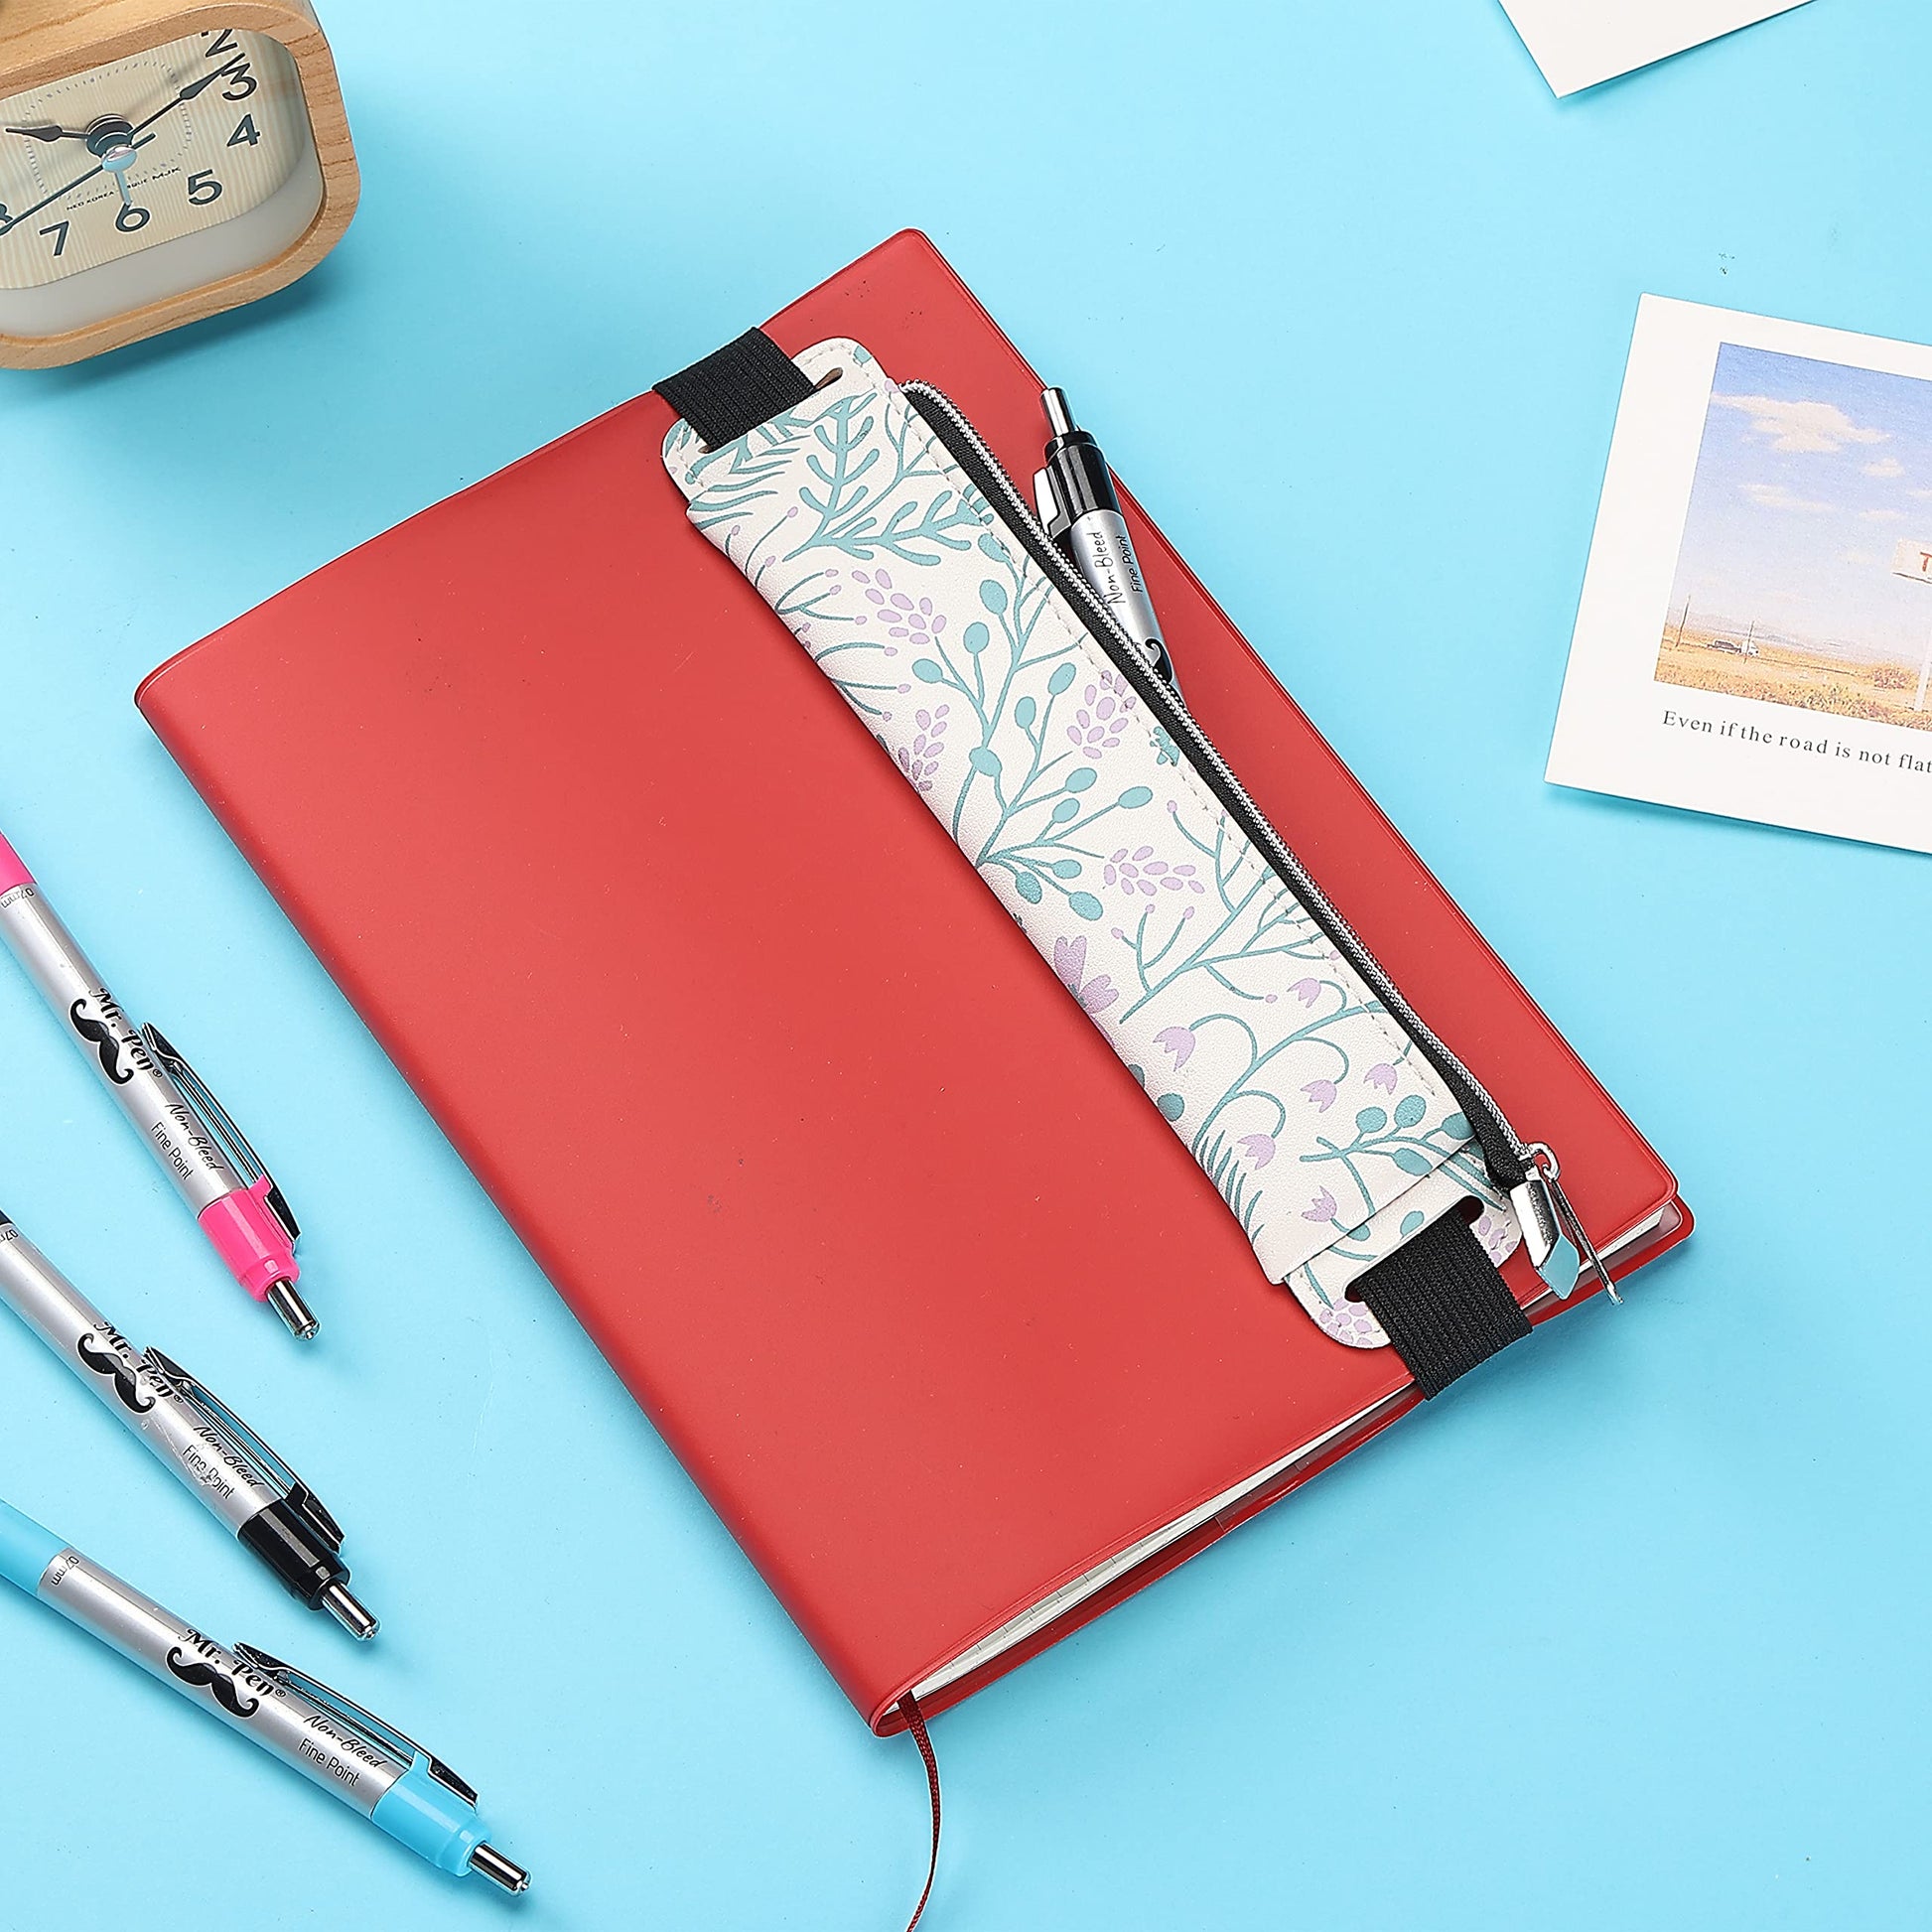 Mr. Pen- Adjustable Elastic Band Pen Holder, Pen Holder for Notebook, Notebook Pen Holder, Pen Sleeve, Journal Pen Holder, Pencil Holder for